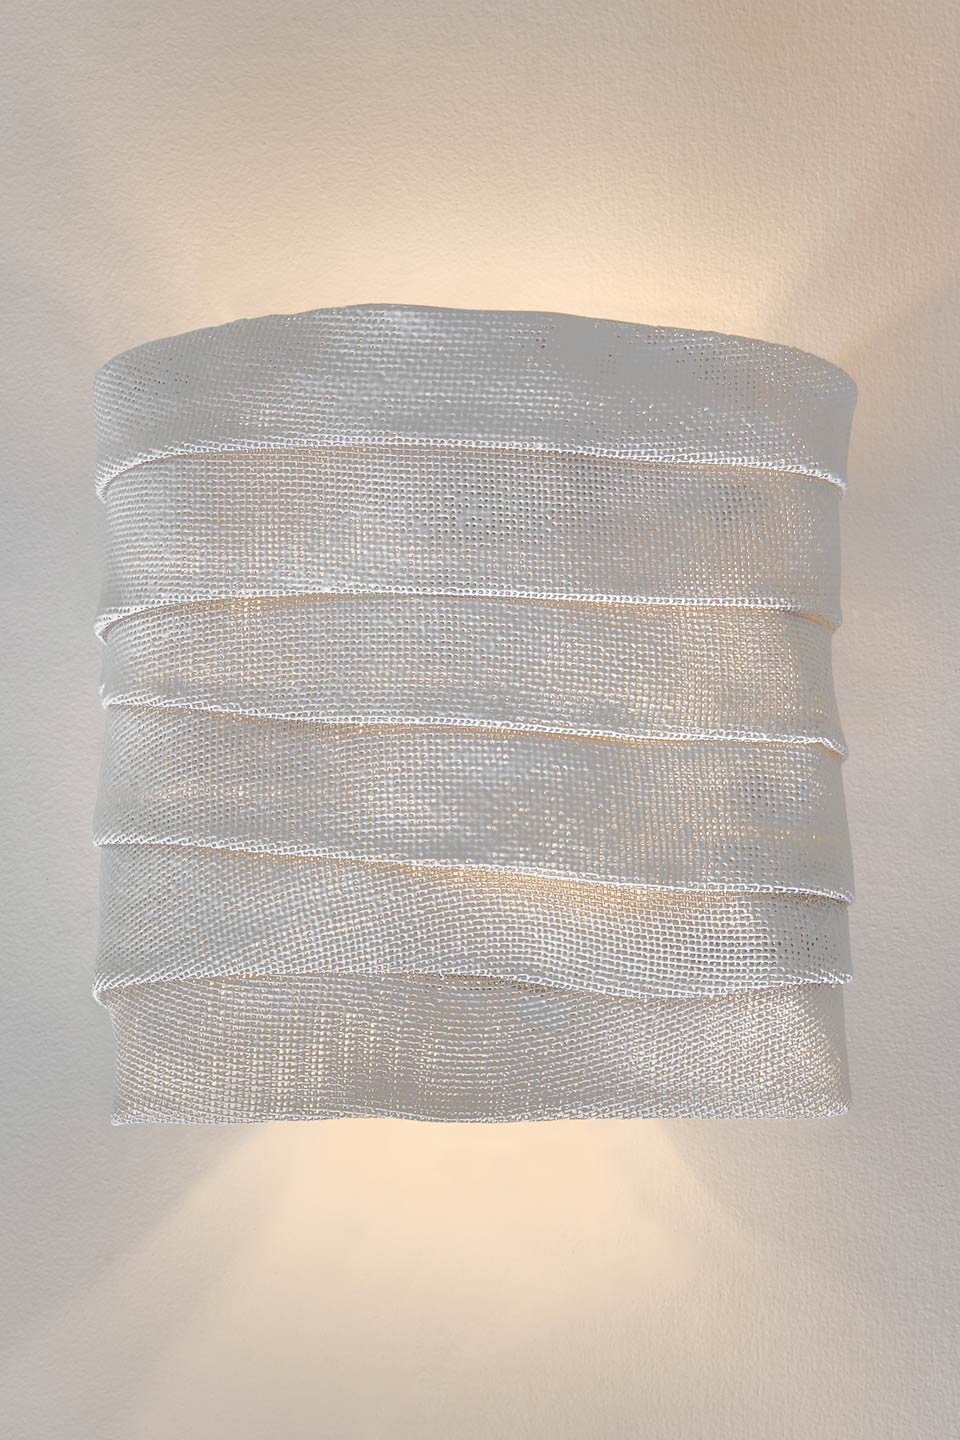 Small pleated white folded fabric wall lamp Kala. Arturo Alvarez. 